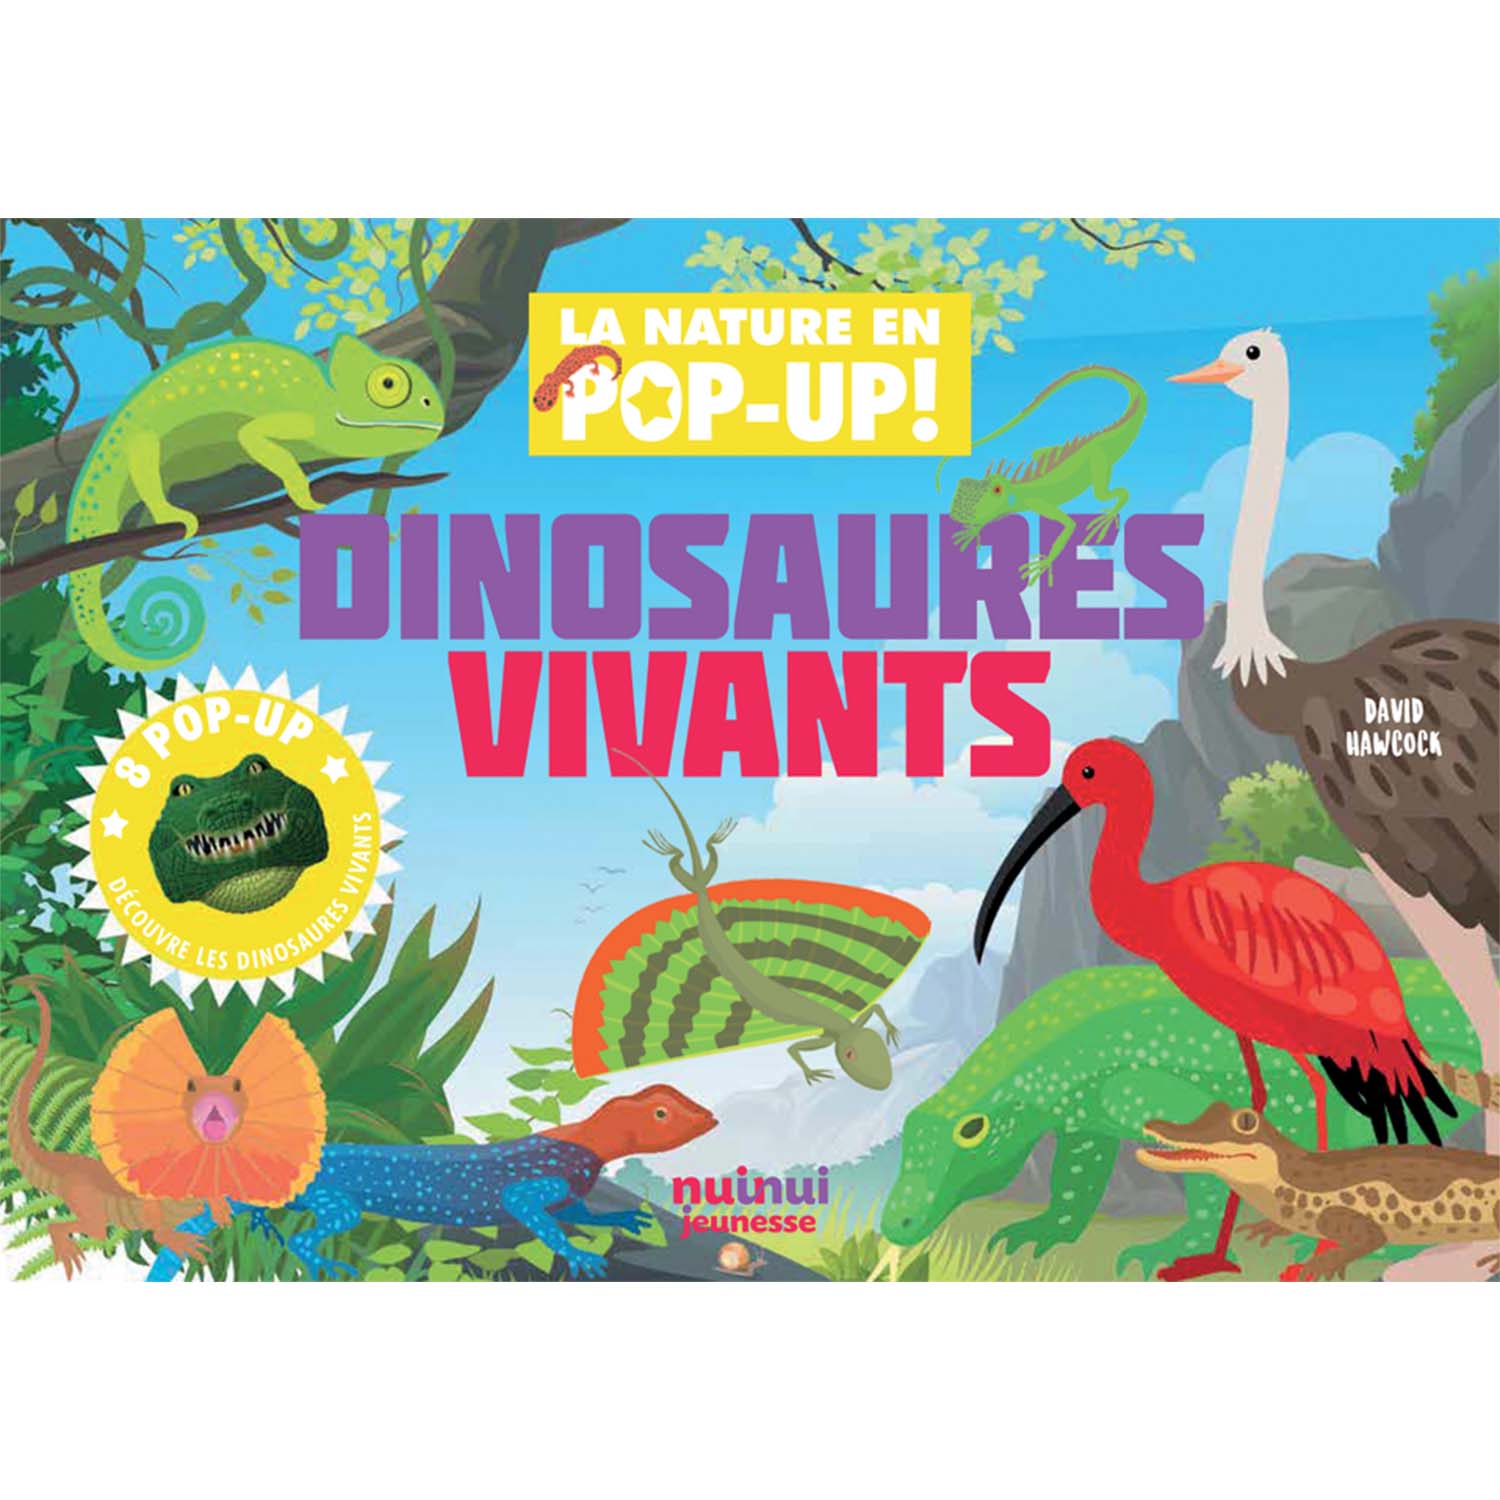 La nature en pop-up - Dinosaures vivants